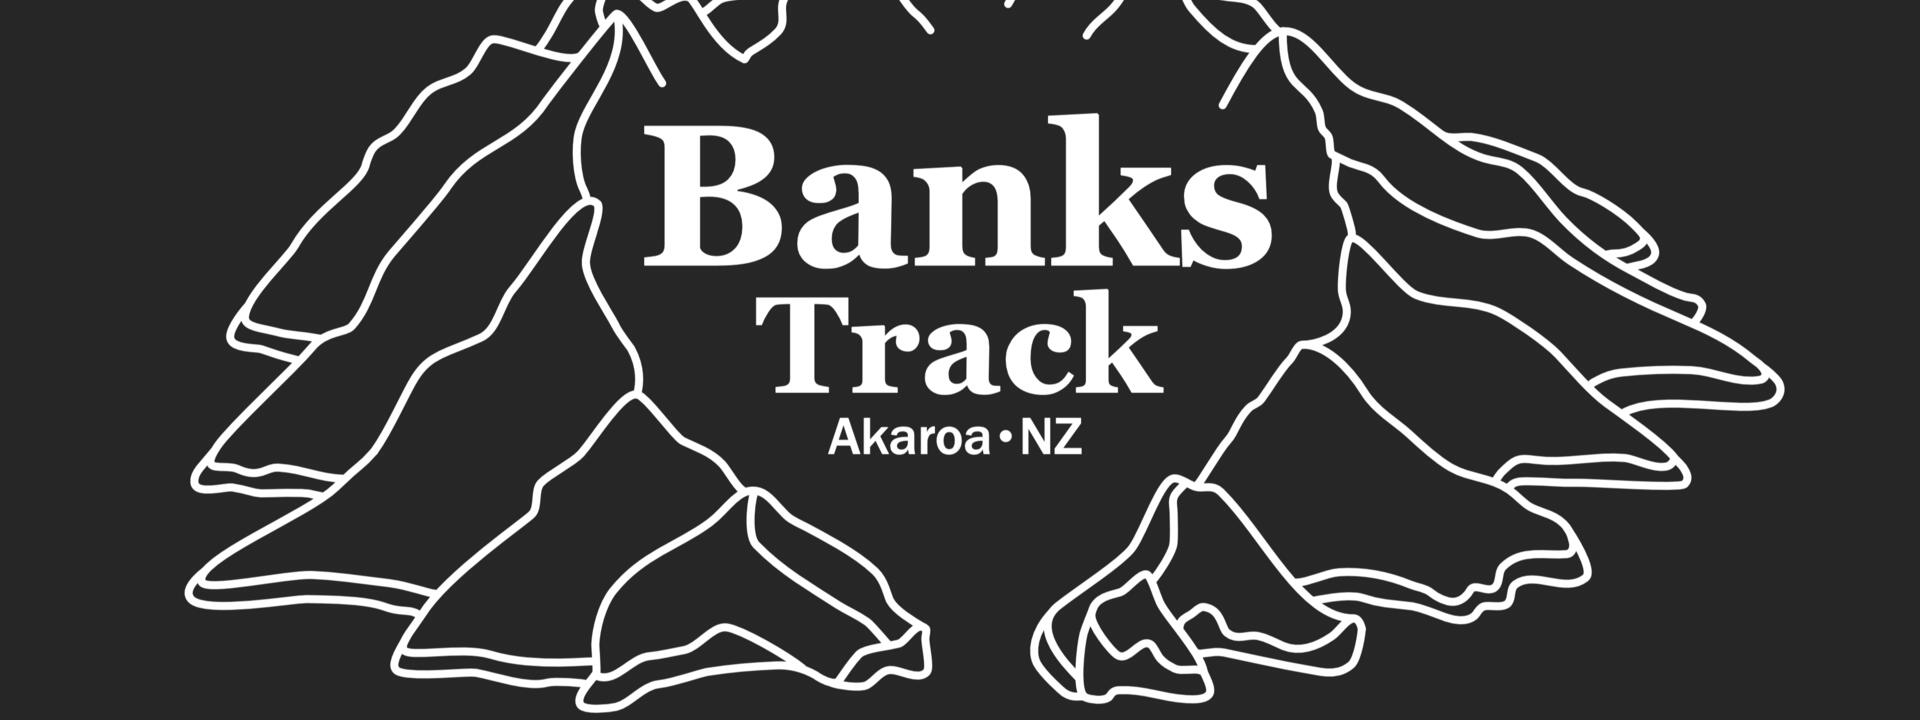 Banks Track Logo White On Charcole.jpg